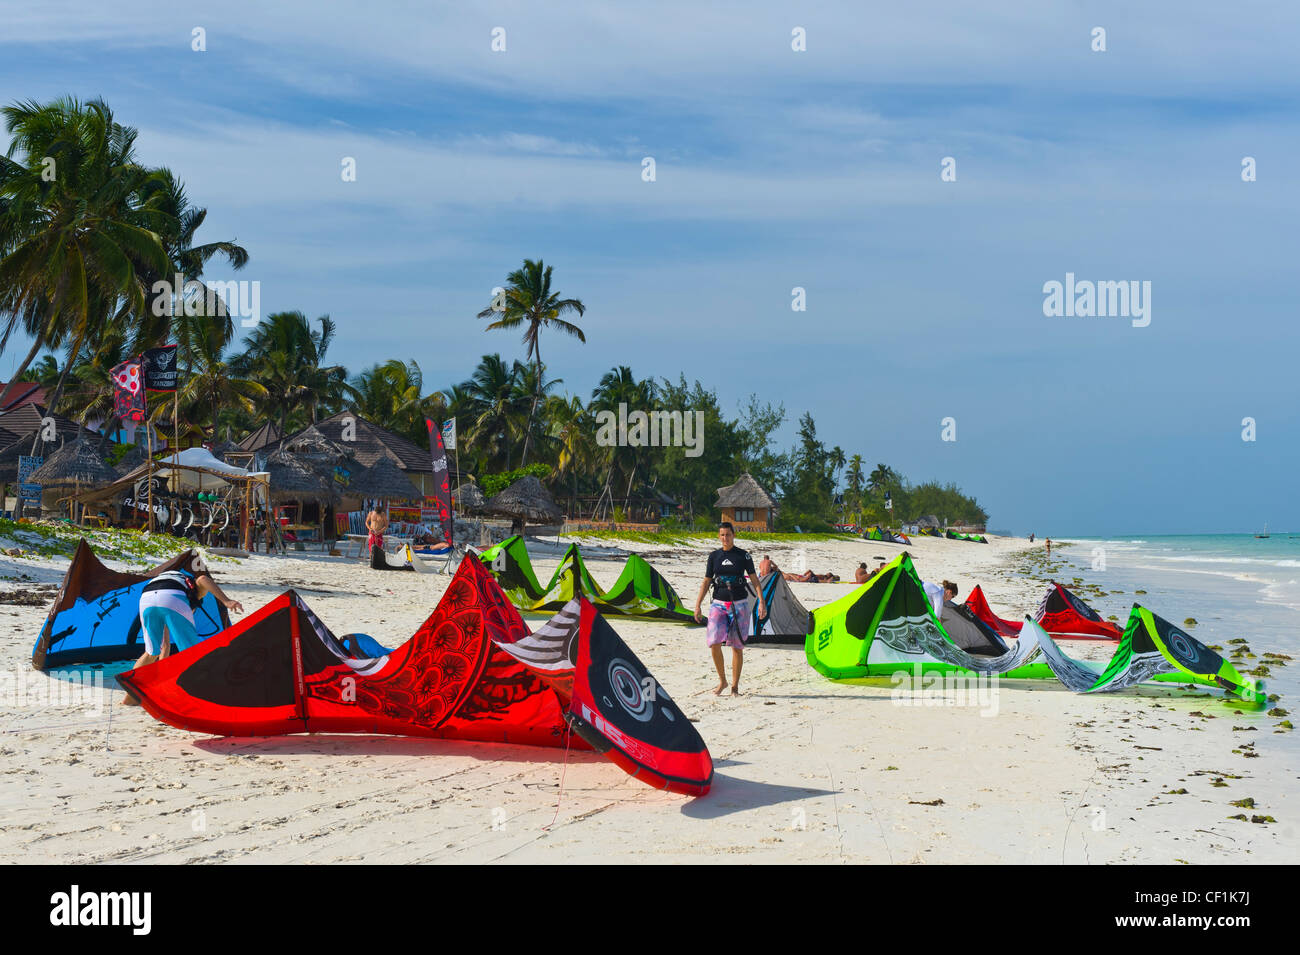 Kite surfers prepare their kites for launching in Paje, Zanzibar, Tanzania Stock Photo